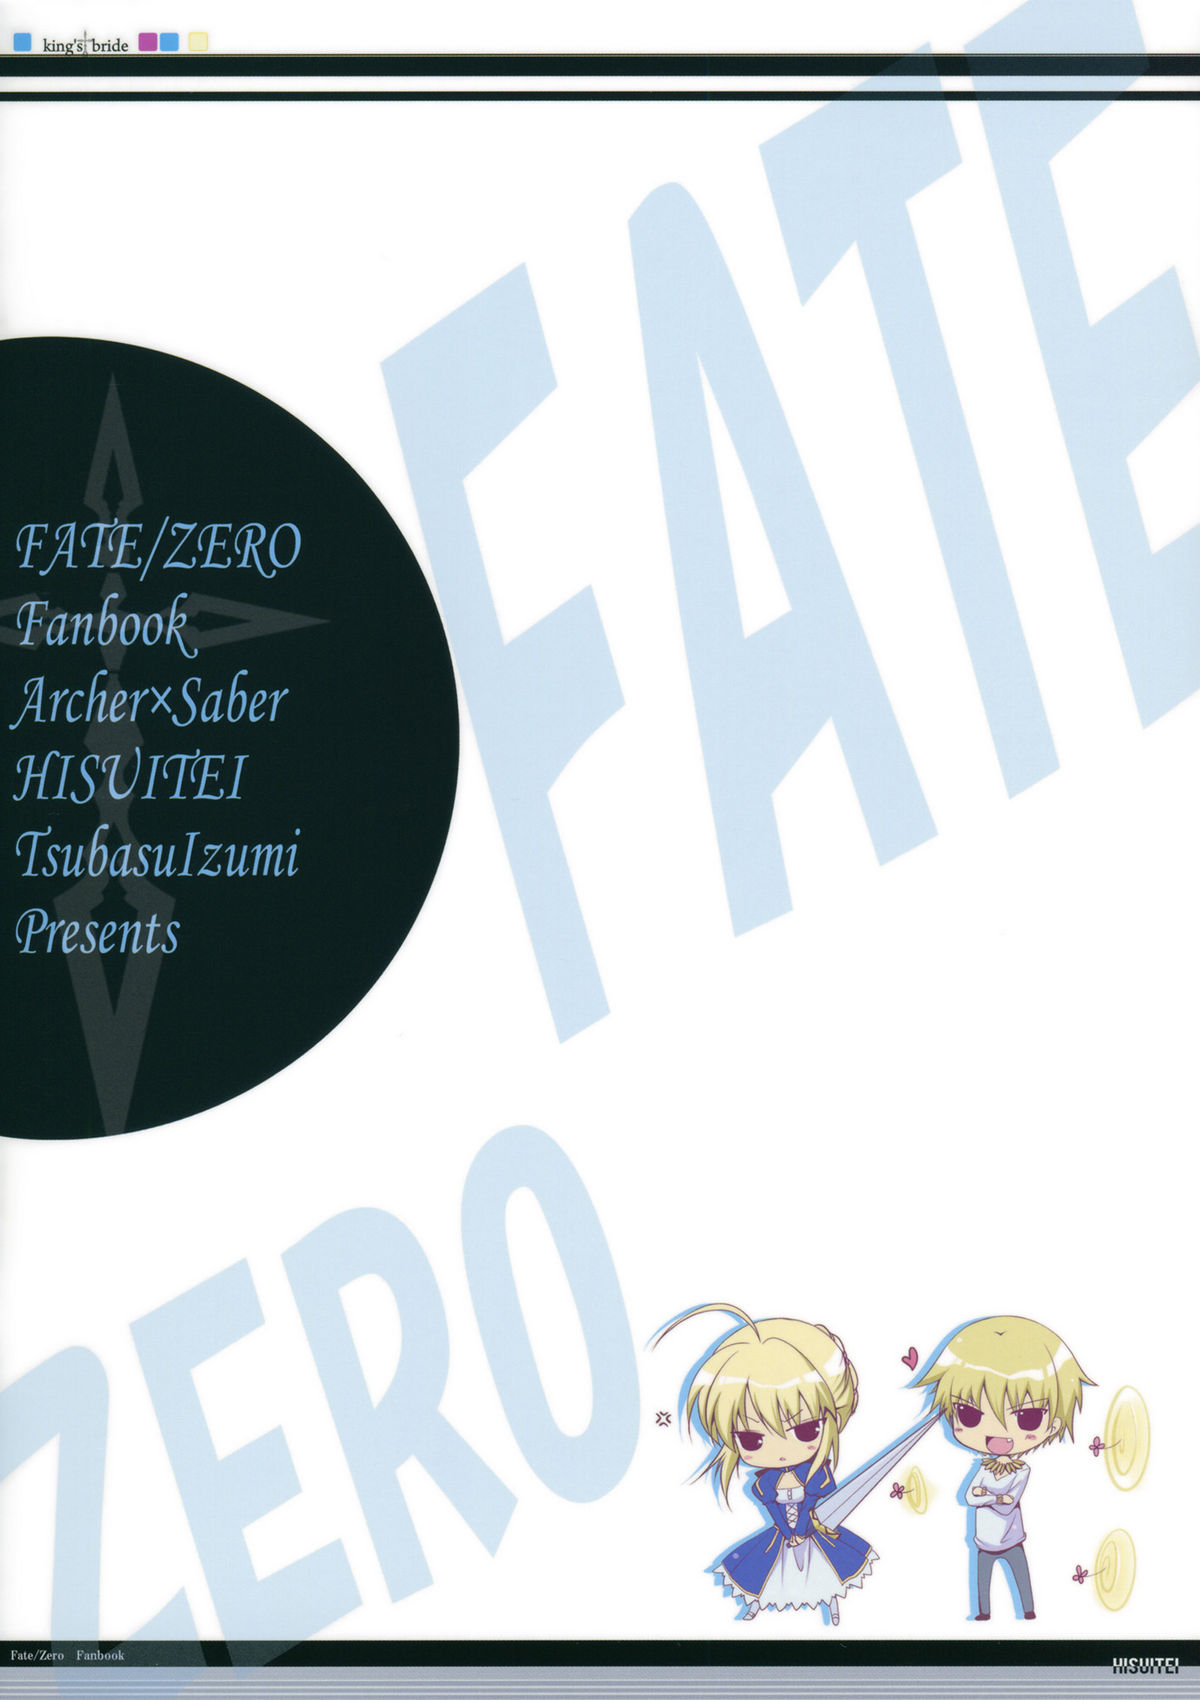 (C82) [翡翠亭 (和泉つばす)] King's bride (Fate/Zero)